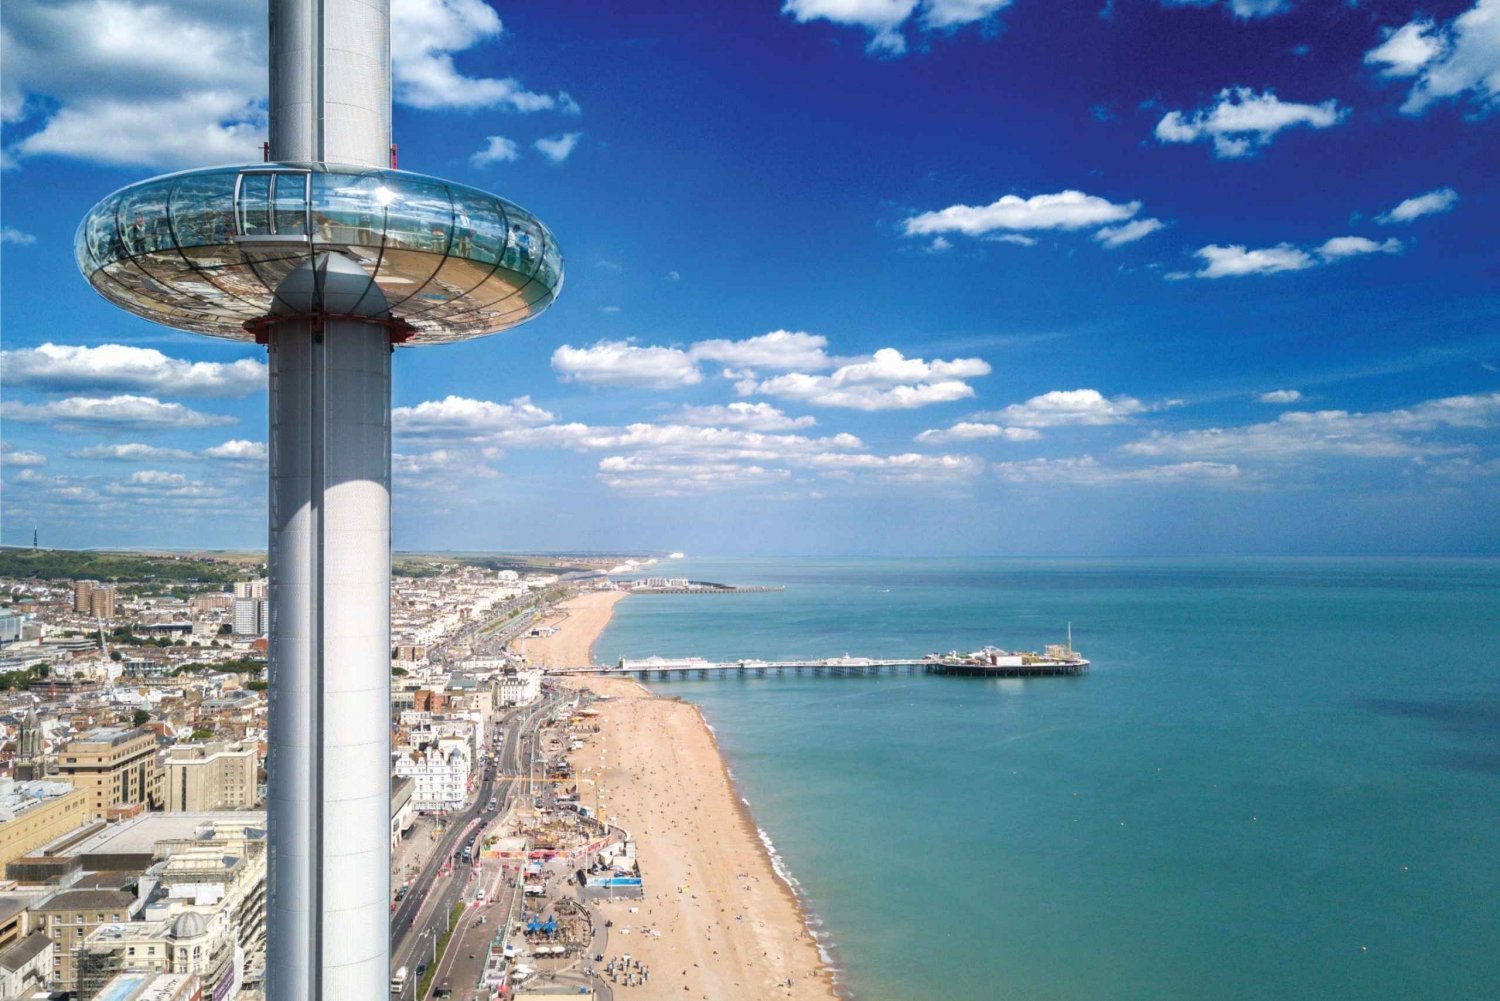 Brighton: View i360 Ticket and Cream Tea